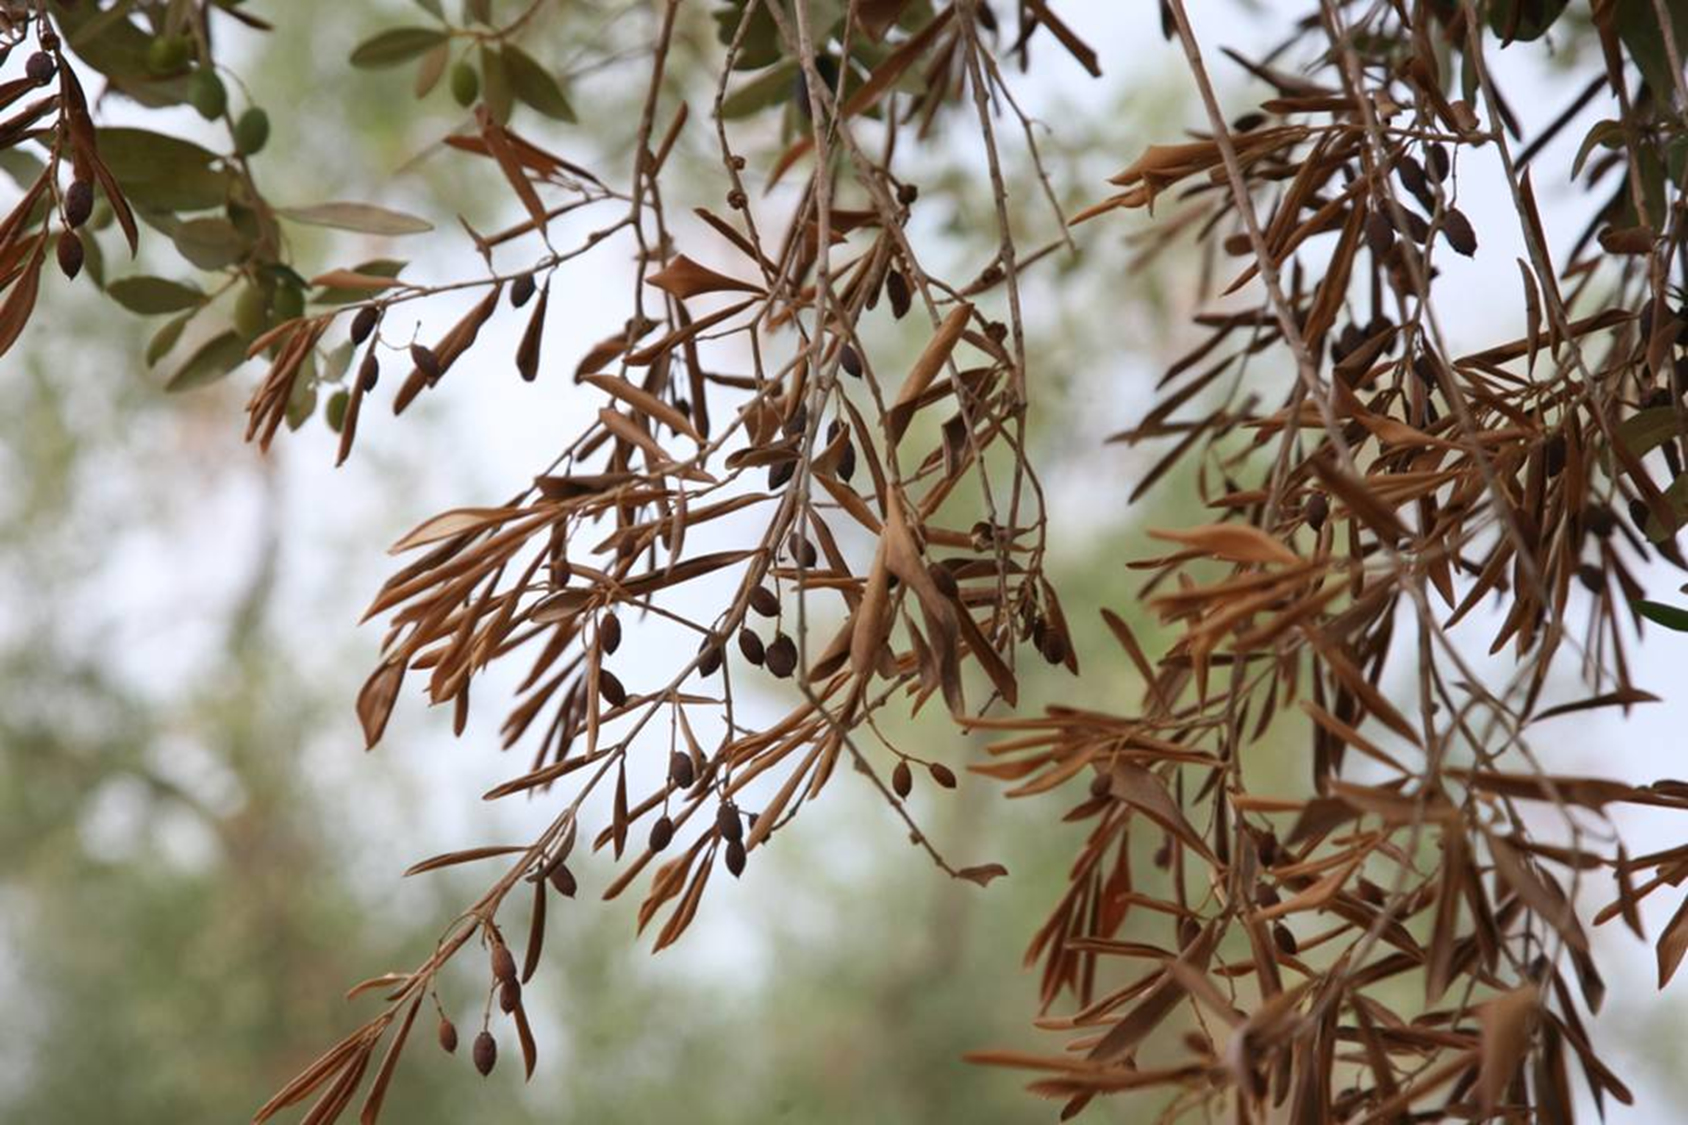 Les ravages de la Xylella Fastidiosa sur les oliviers (efsa)